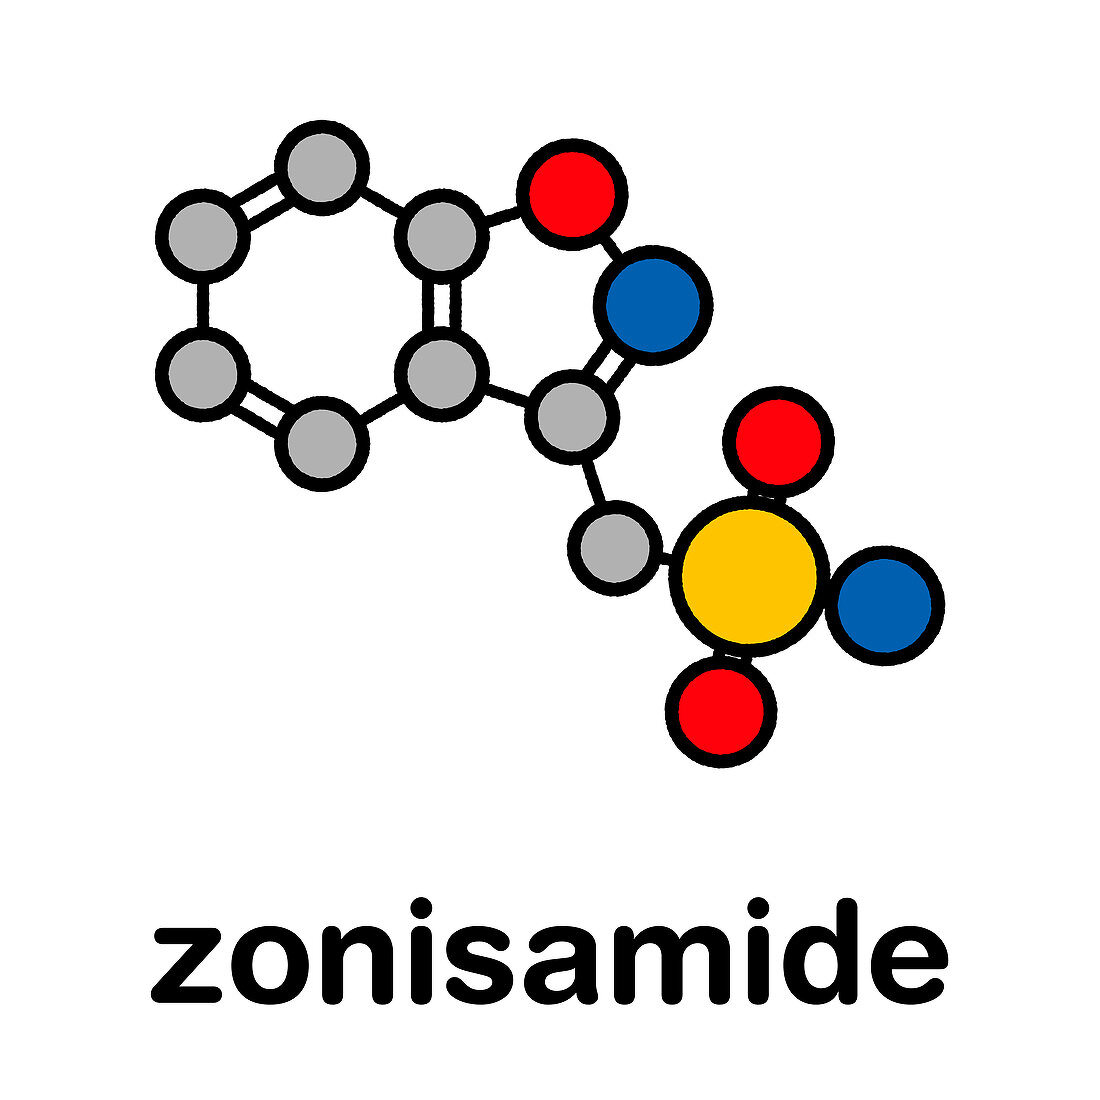 Zonisamide epilepsy drug, molecular model